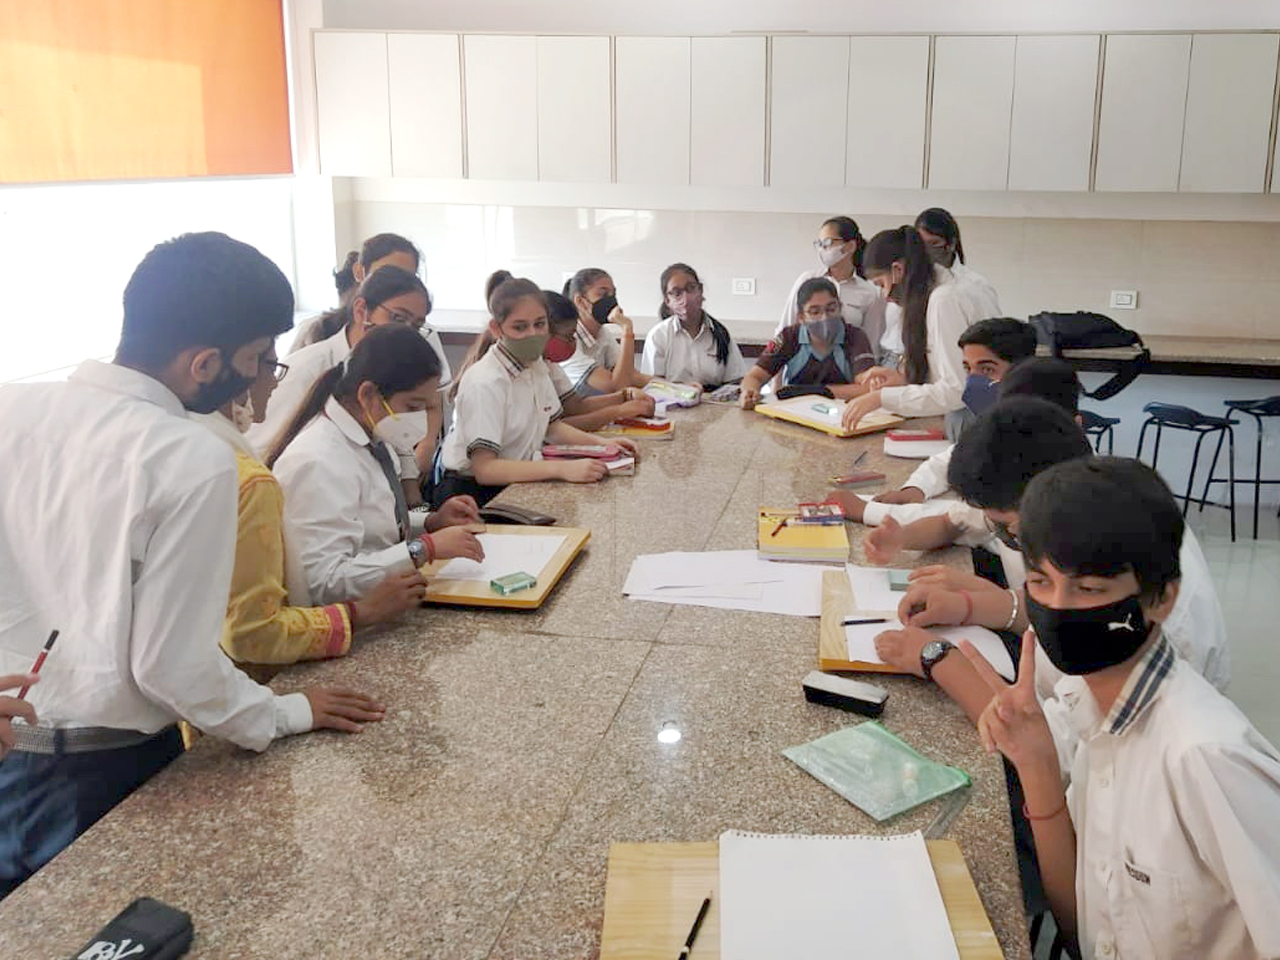 Presidium Rajnagar, STUDENTS PRACTICE THE ART OF INTROSPECTION!